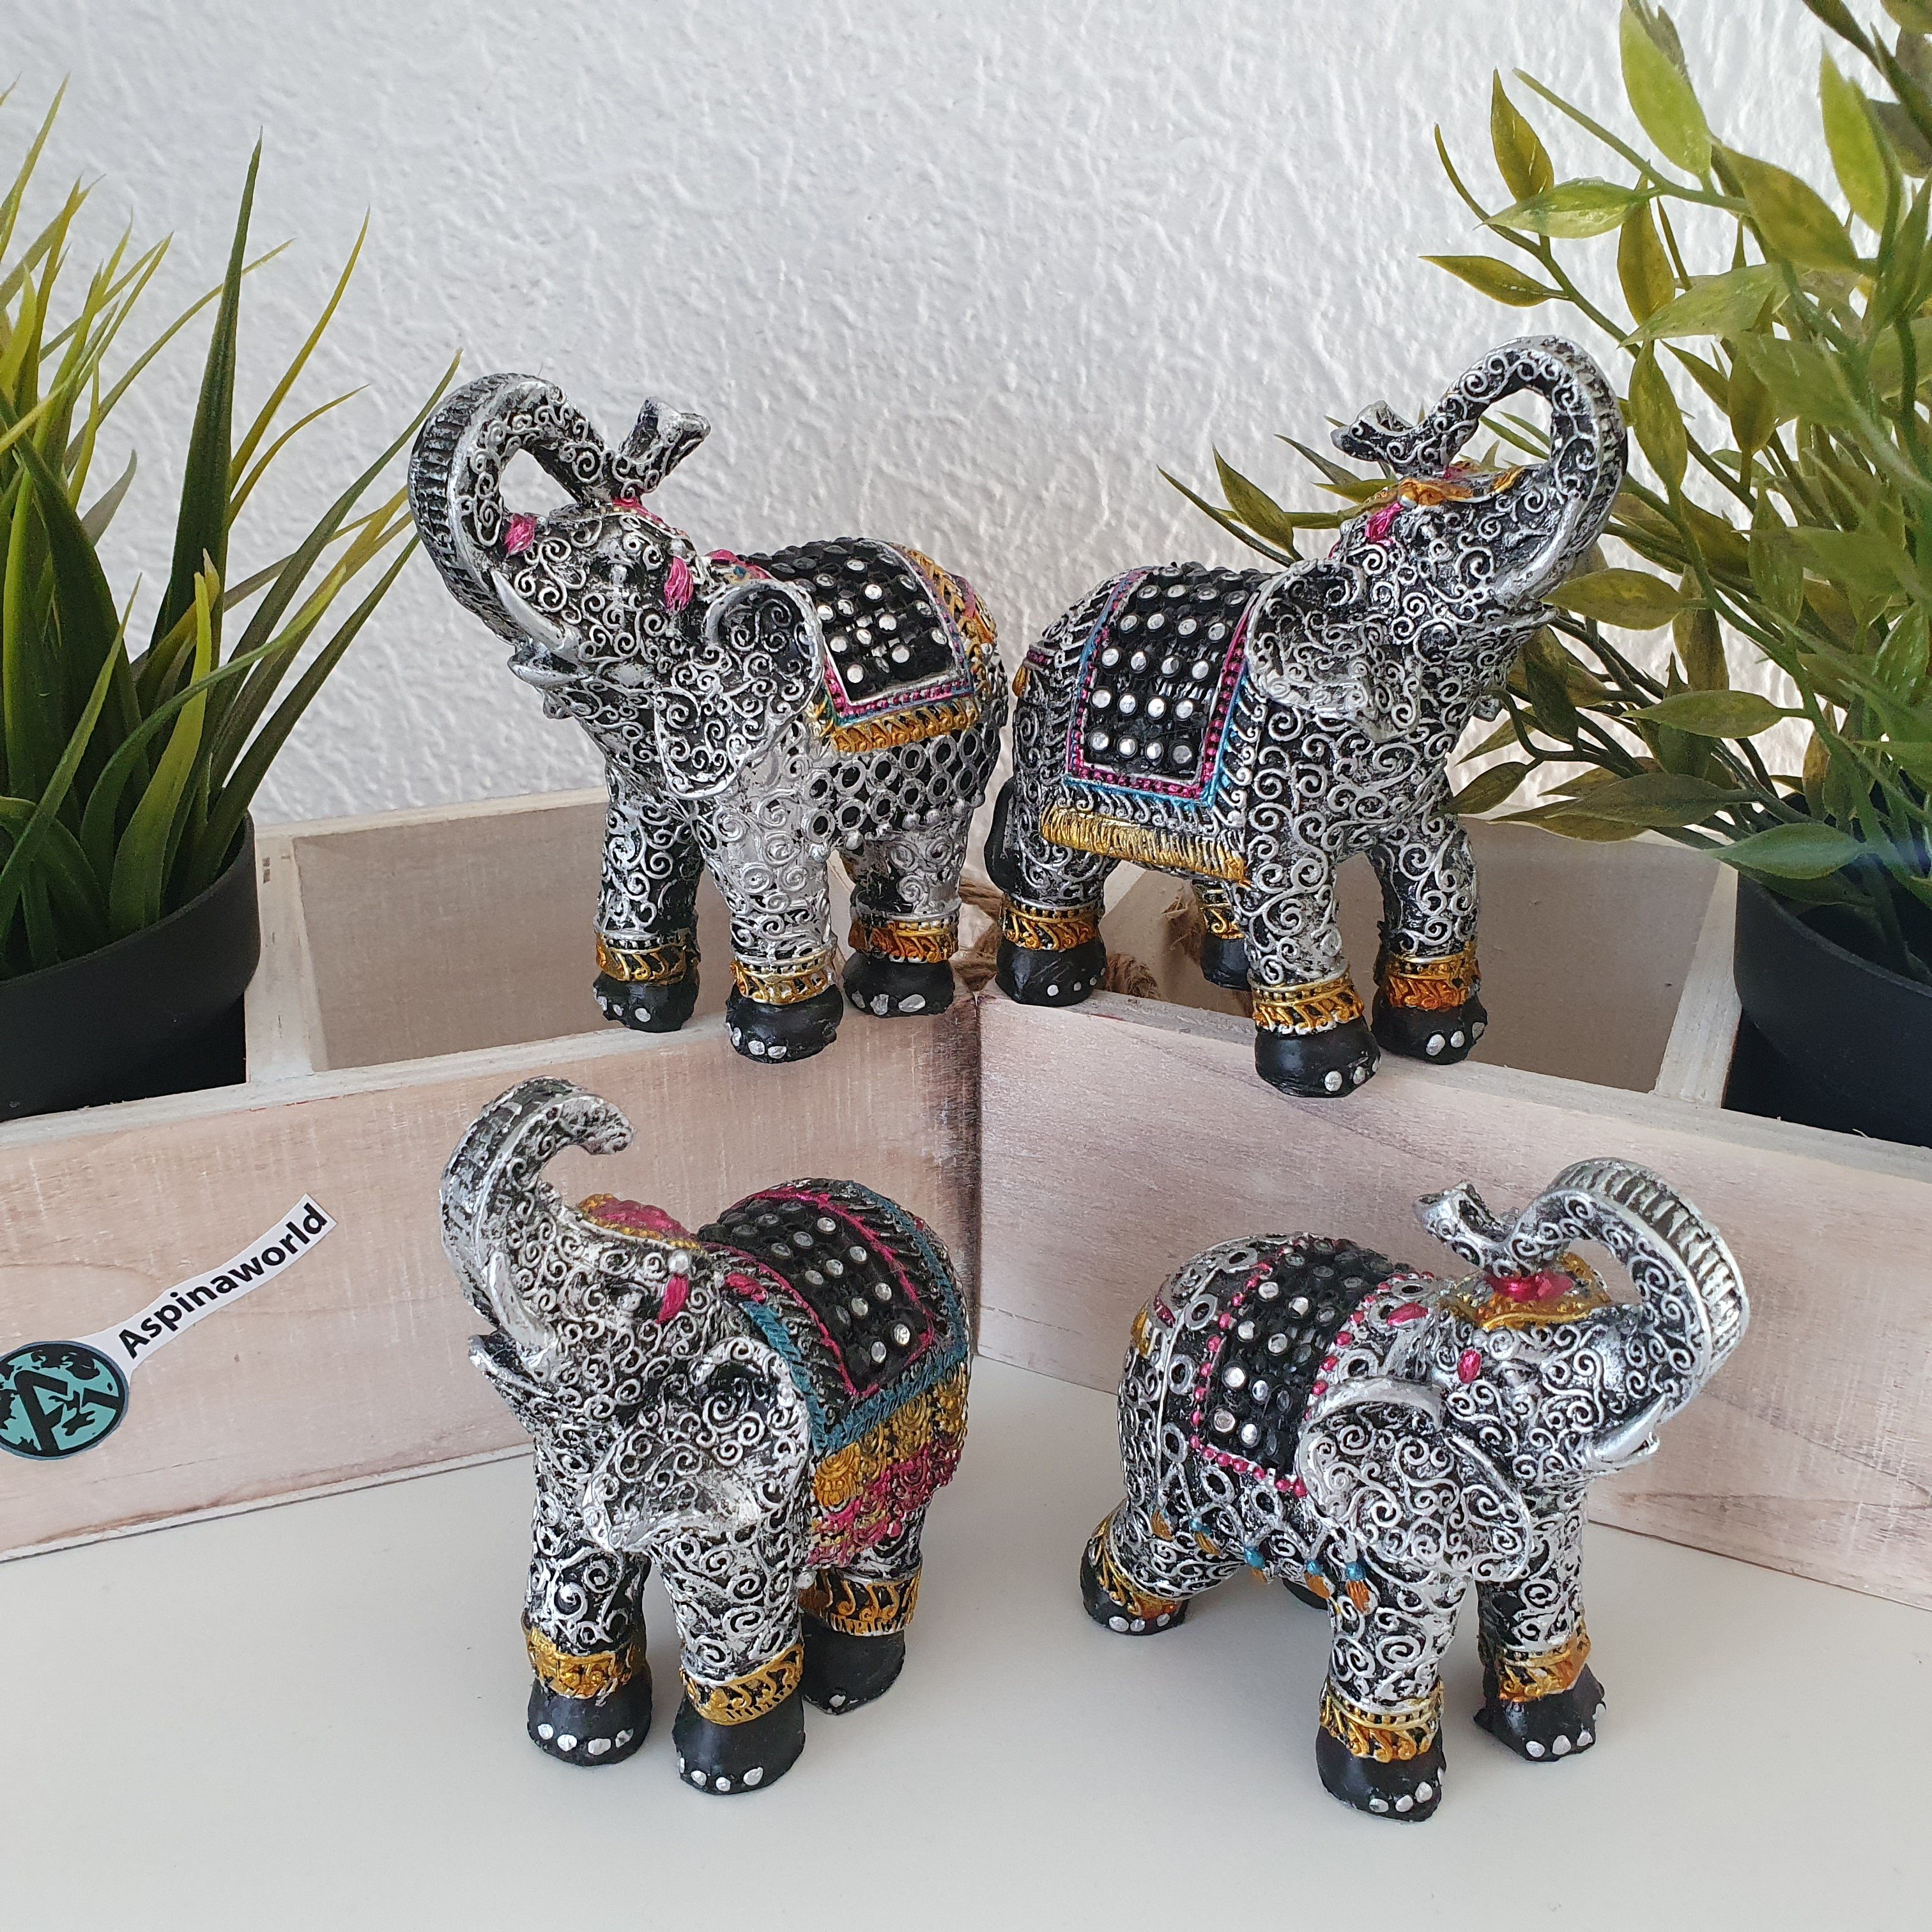 Aspinaworld Gartenfigur Elefanten Figuren im 4 er Set 10 cm | Figuren